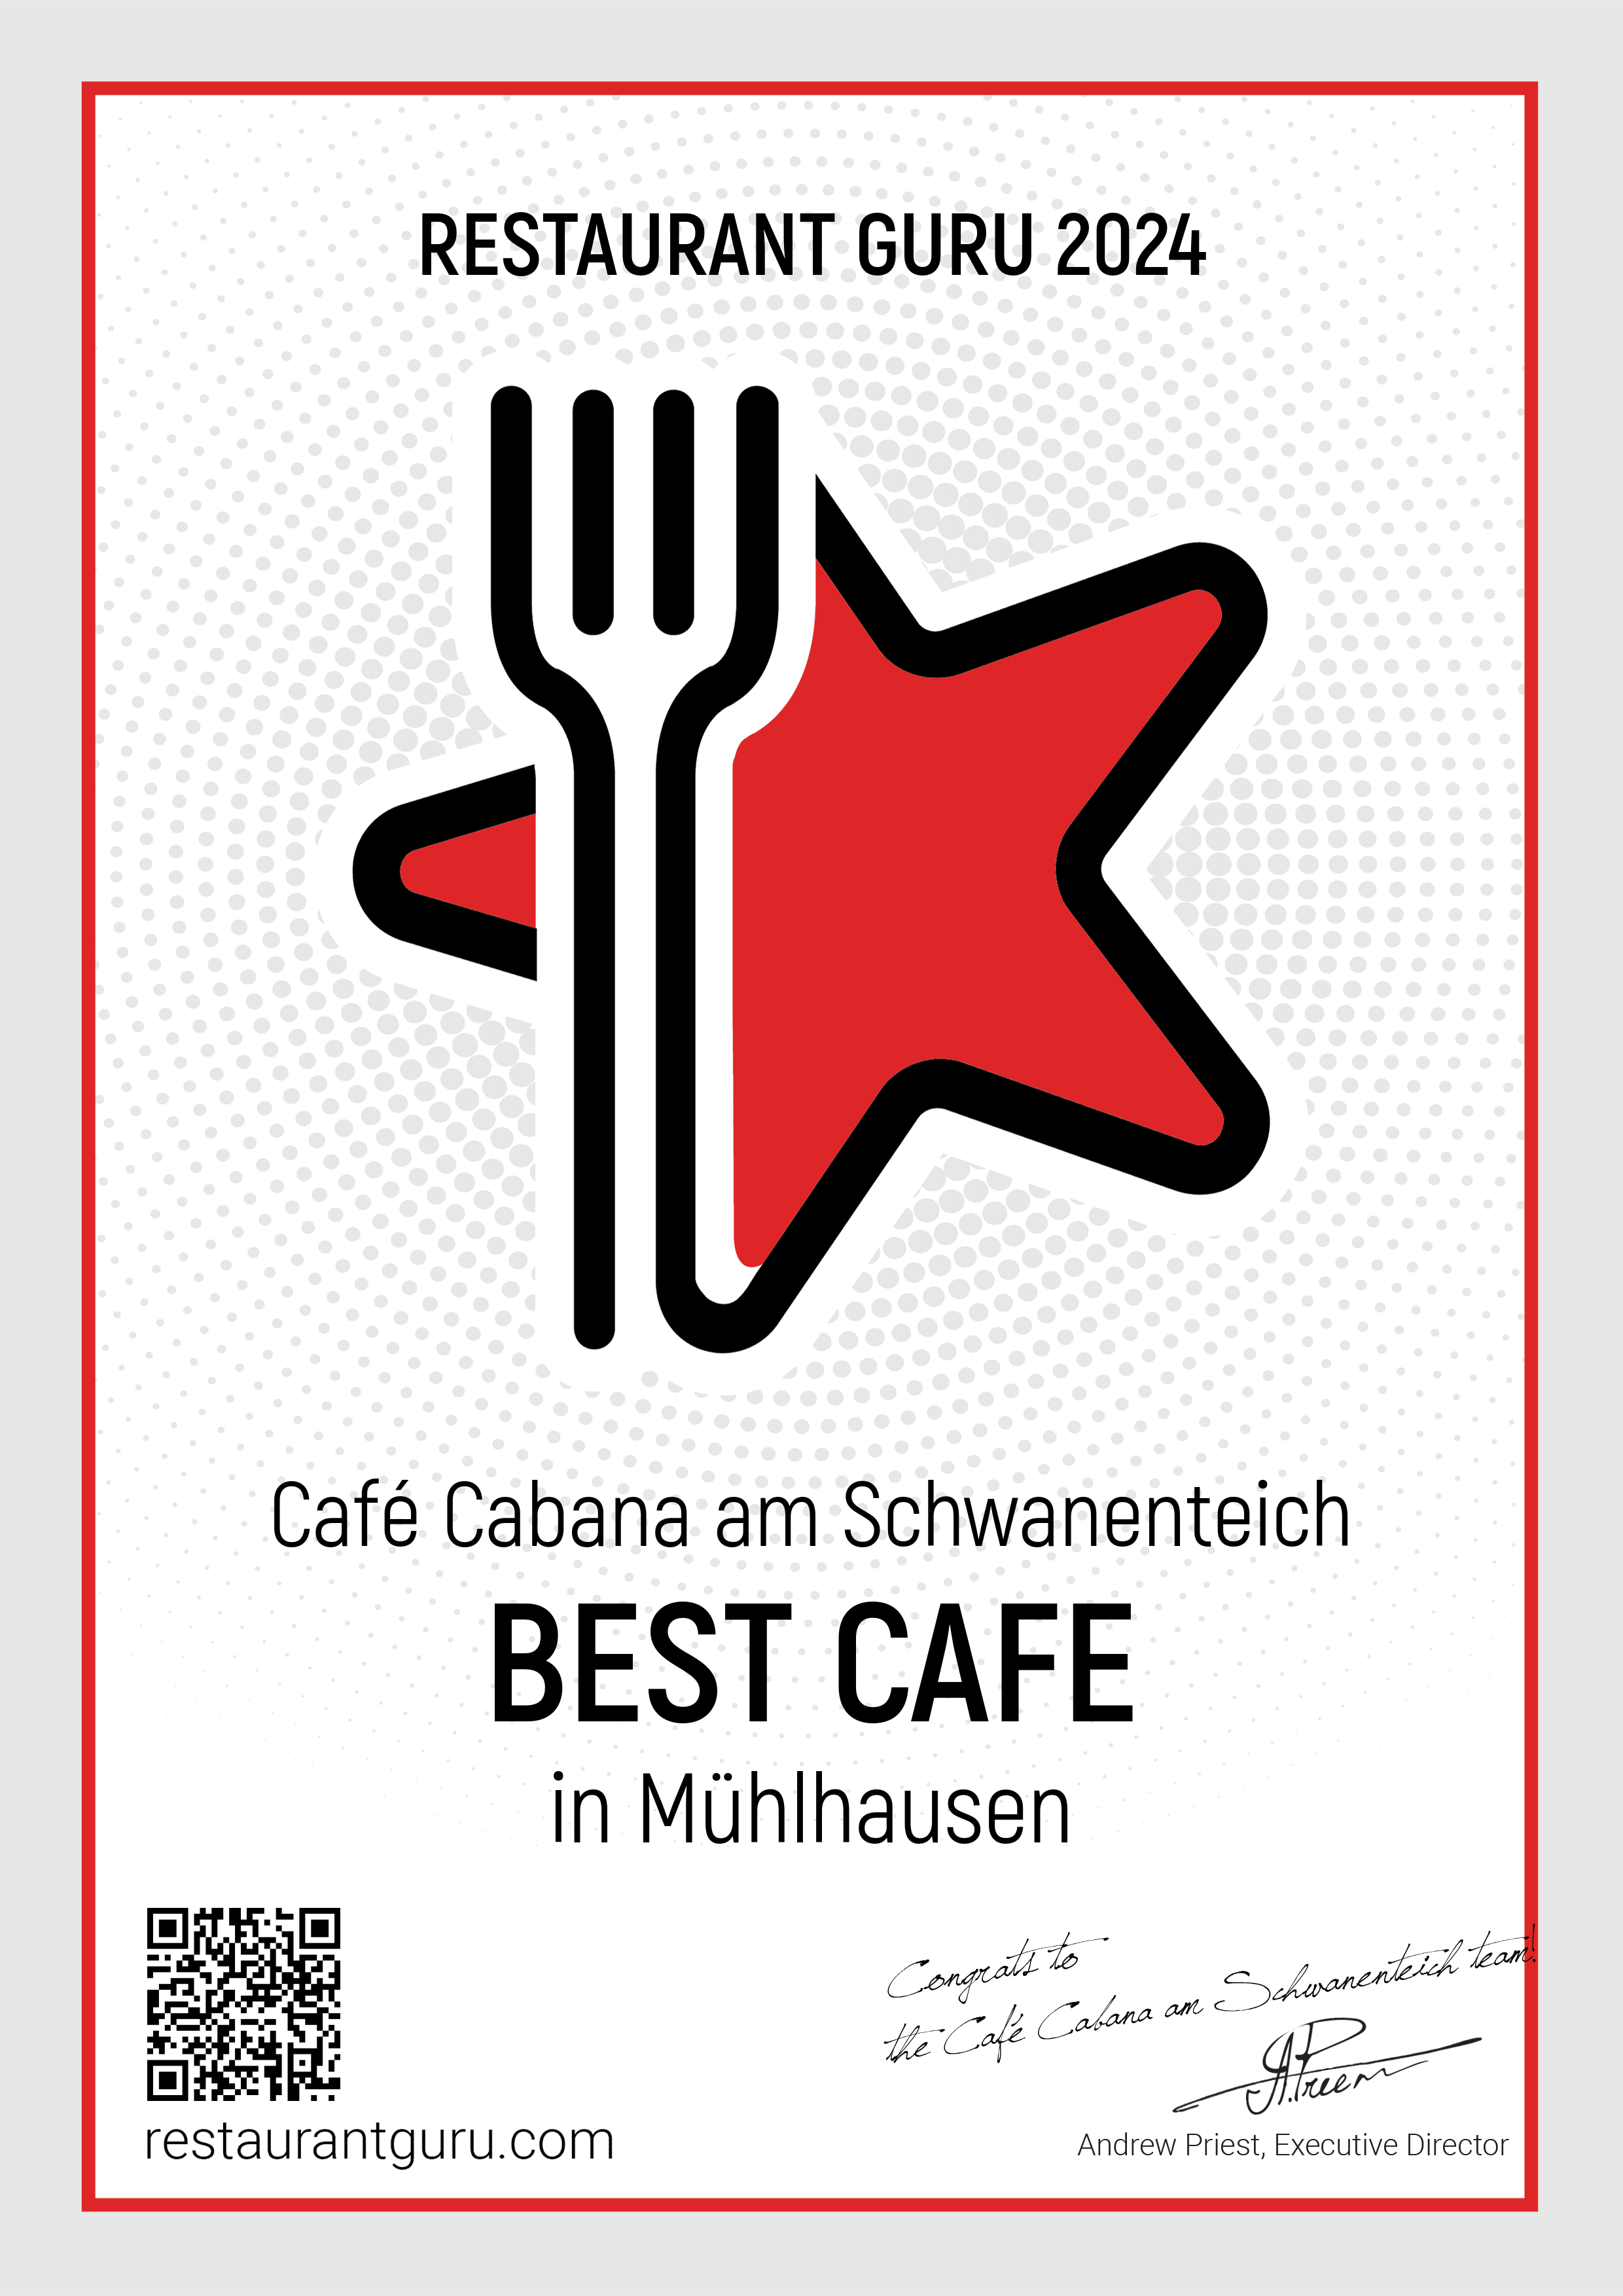 Restaurant Guru 2024 bestes Café Mühlhausen Thüringen